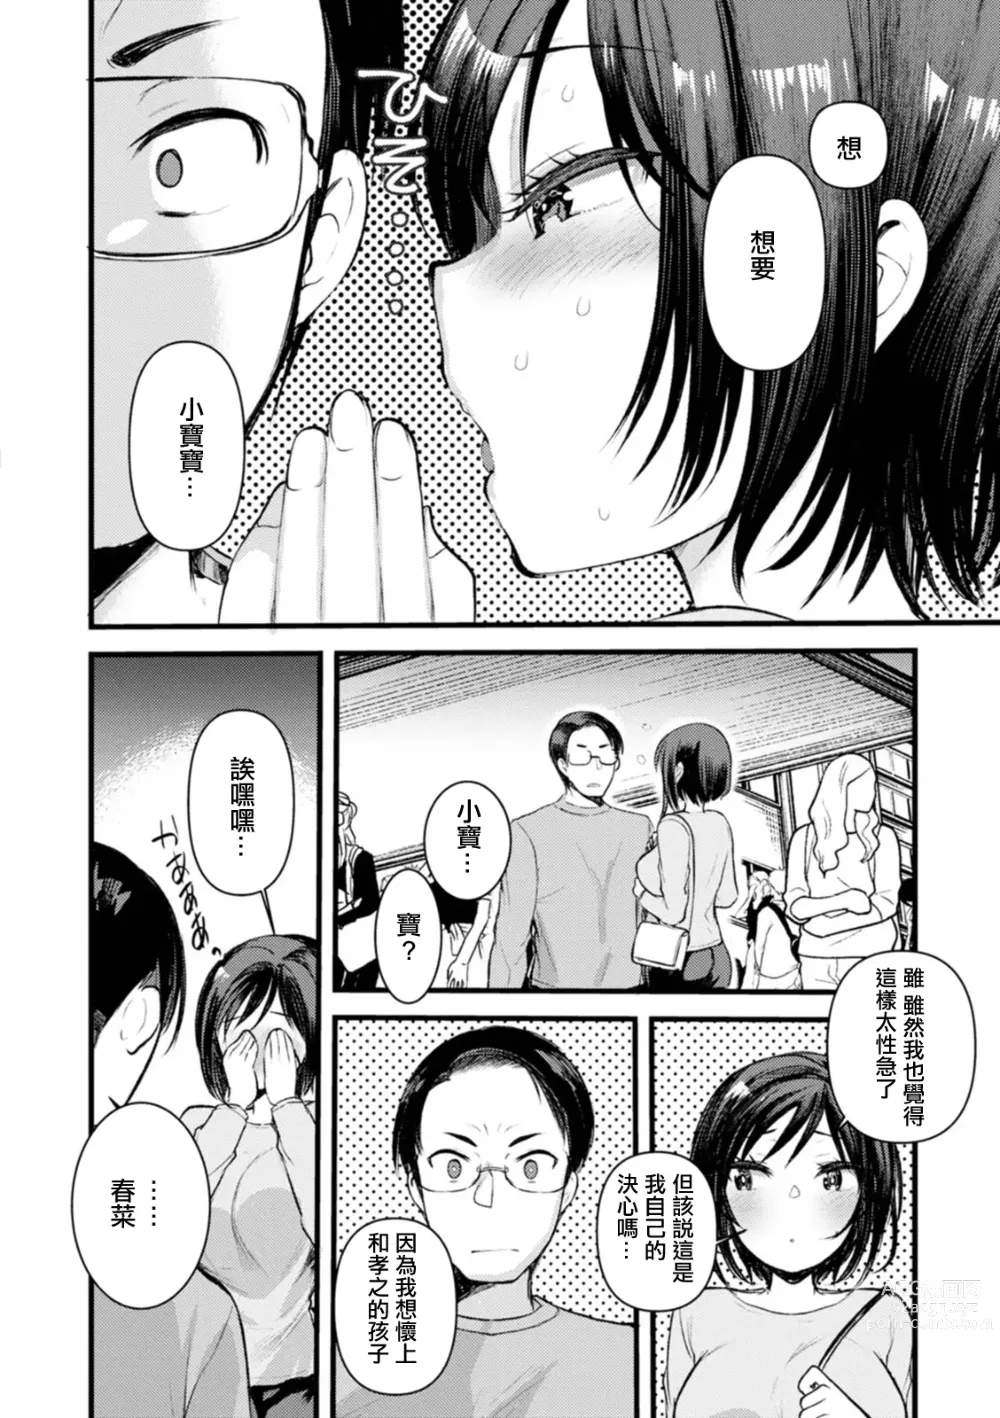 Page 4 of manga Kojirase Ero Nikki Vol.10